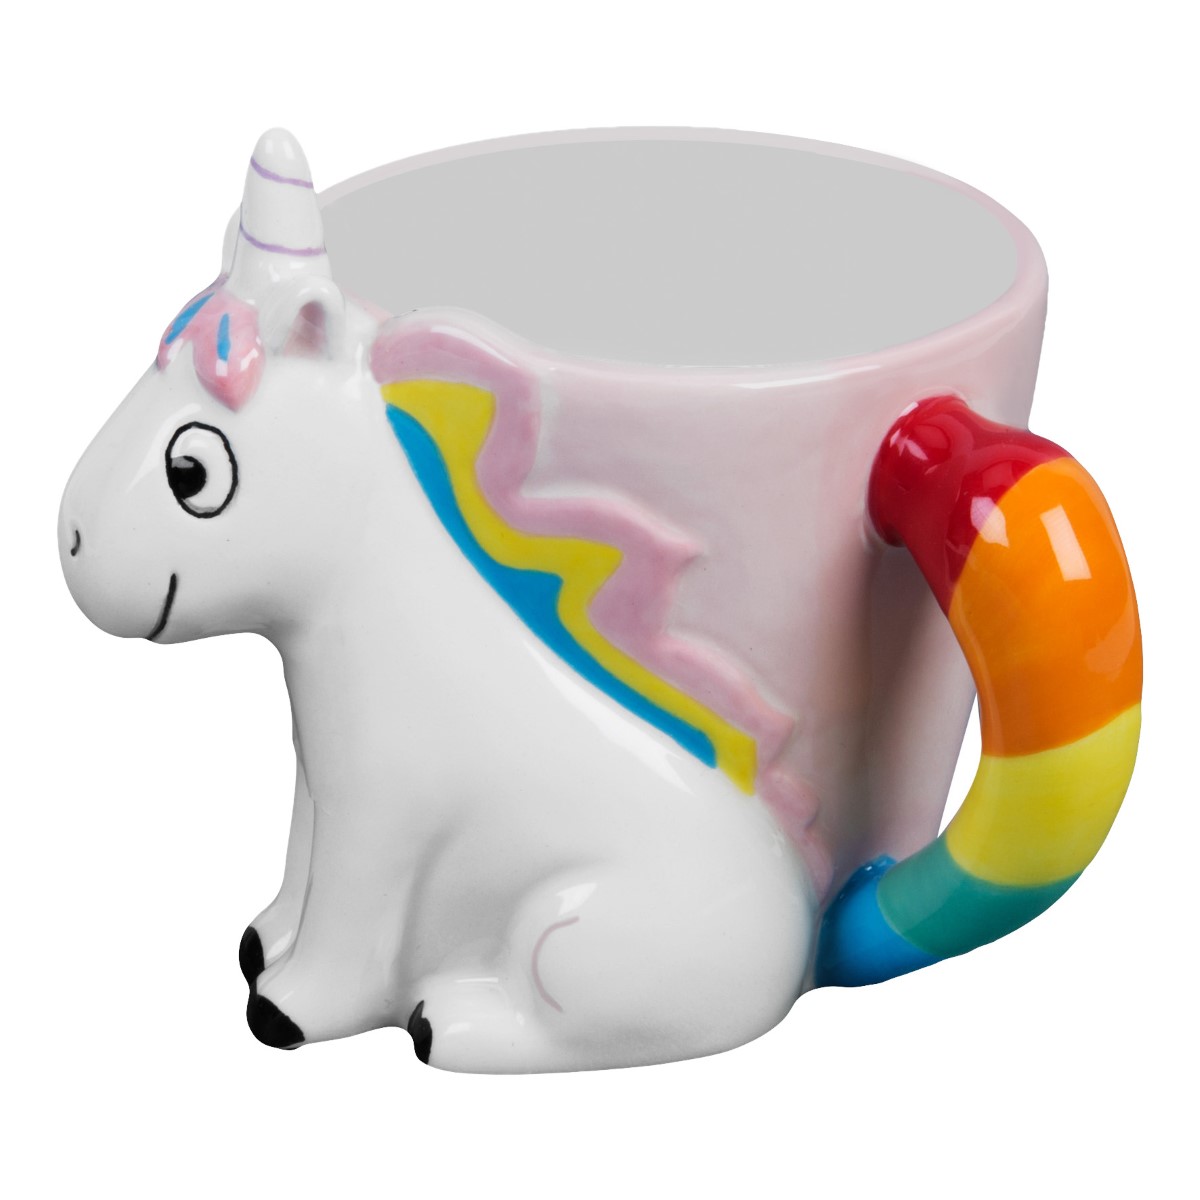 The Happy News Unicorn Ceramic Mug